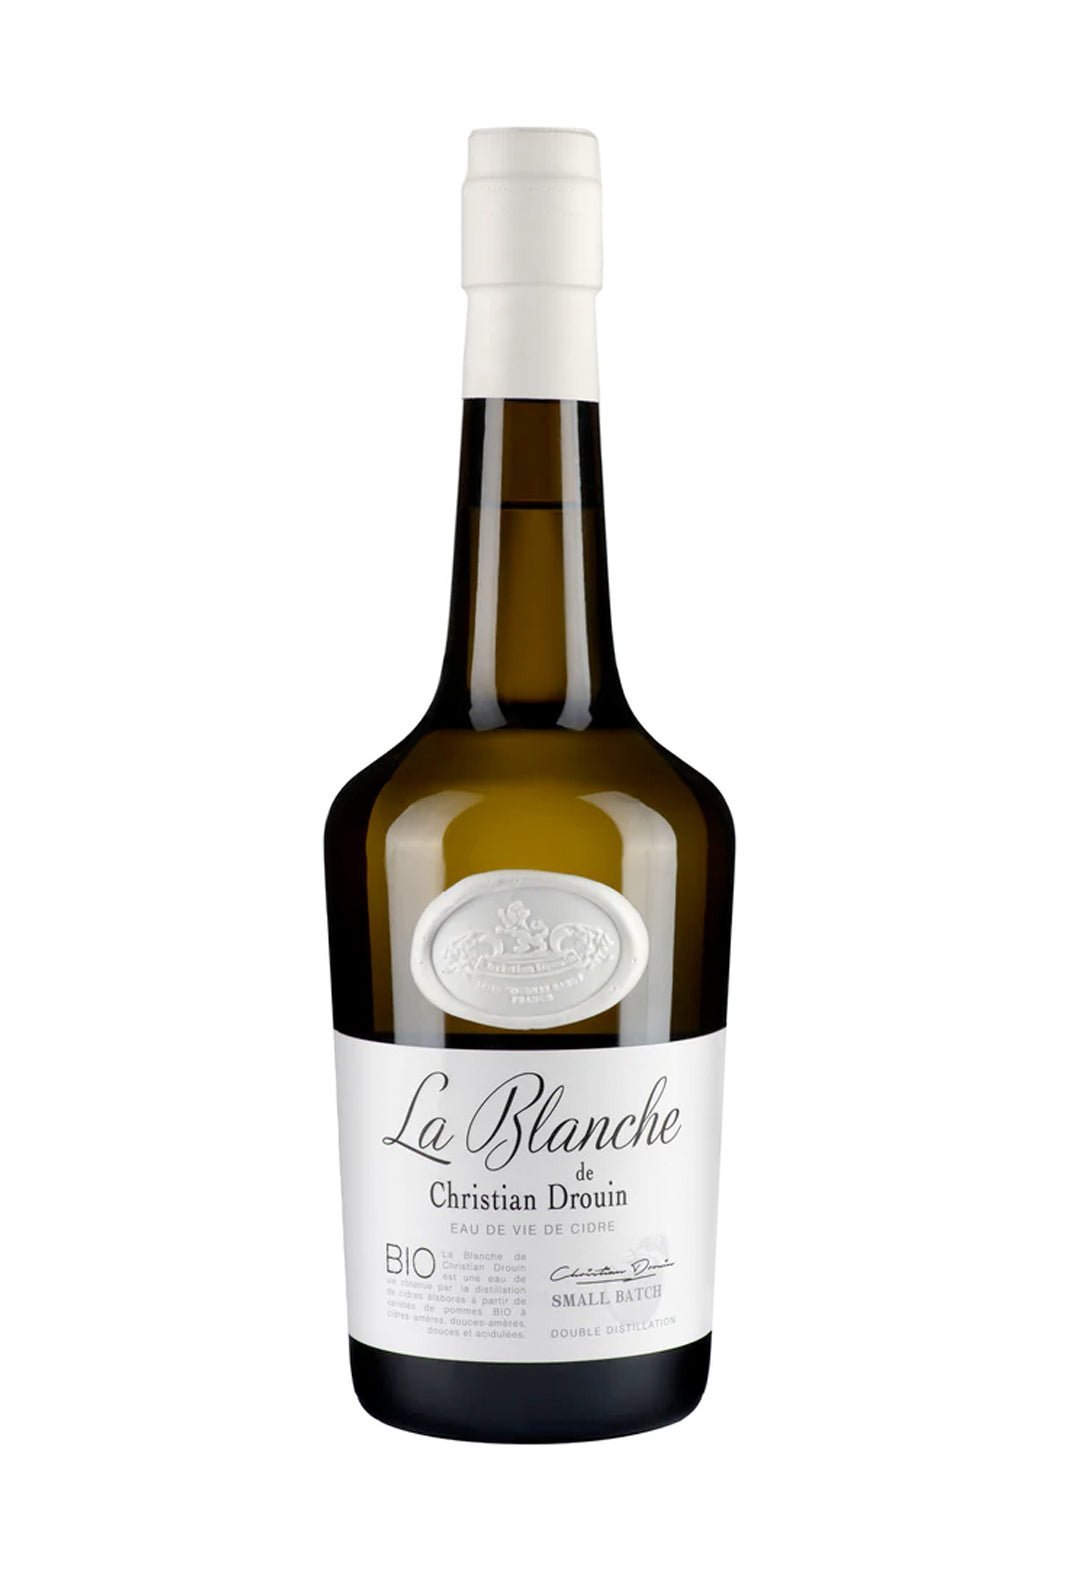 Christian Drouin 'La Blanche' Bio Organic Unaged Calvados 40% 700ml | Brandy | Shop online at Spirits of France